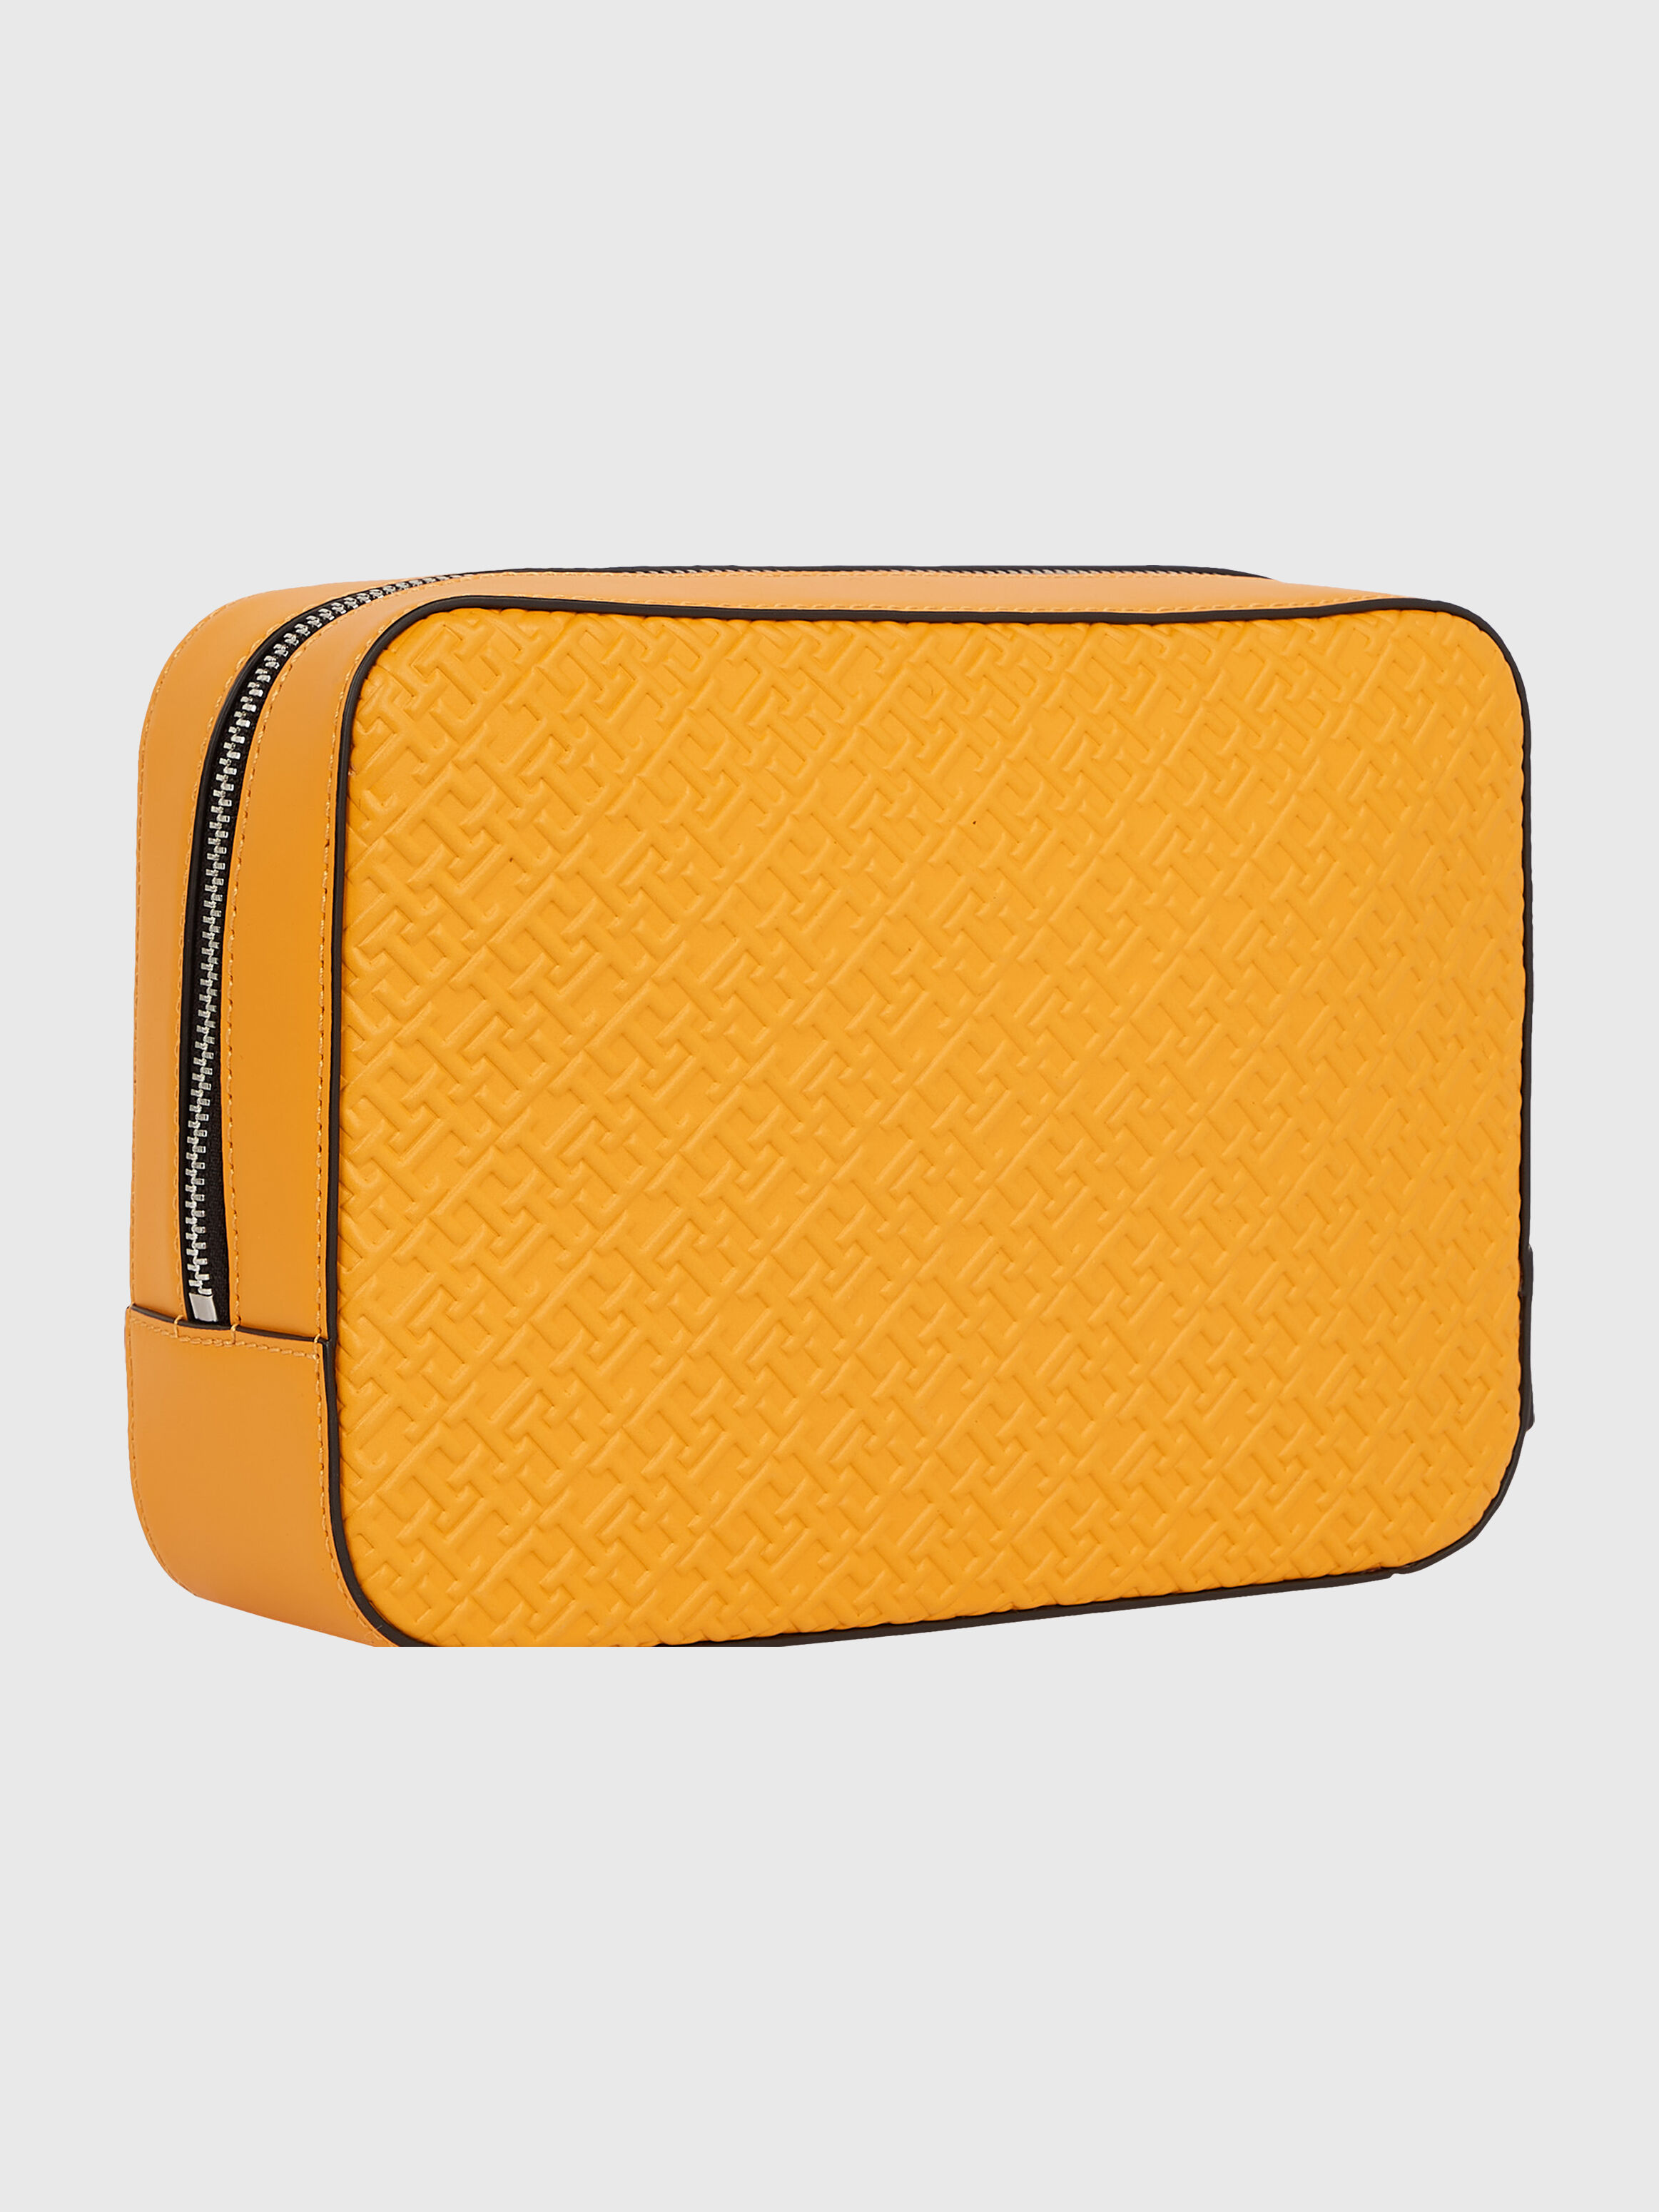 Engraved Waist Bag, Personalized Leather Belt Bag, Belt Bag Unisex With  Monogram, Utility Hip Bag, at Rs 750/piece | Waist Bag in New Delhi | ID:  2850330573748